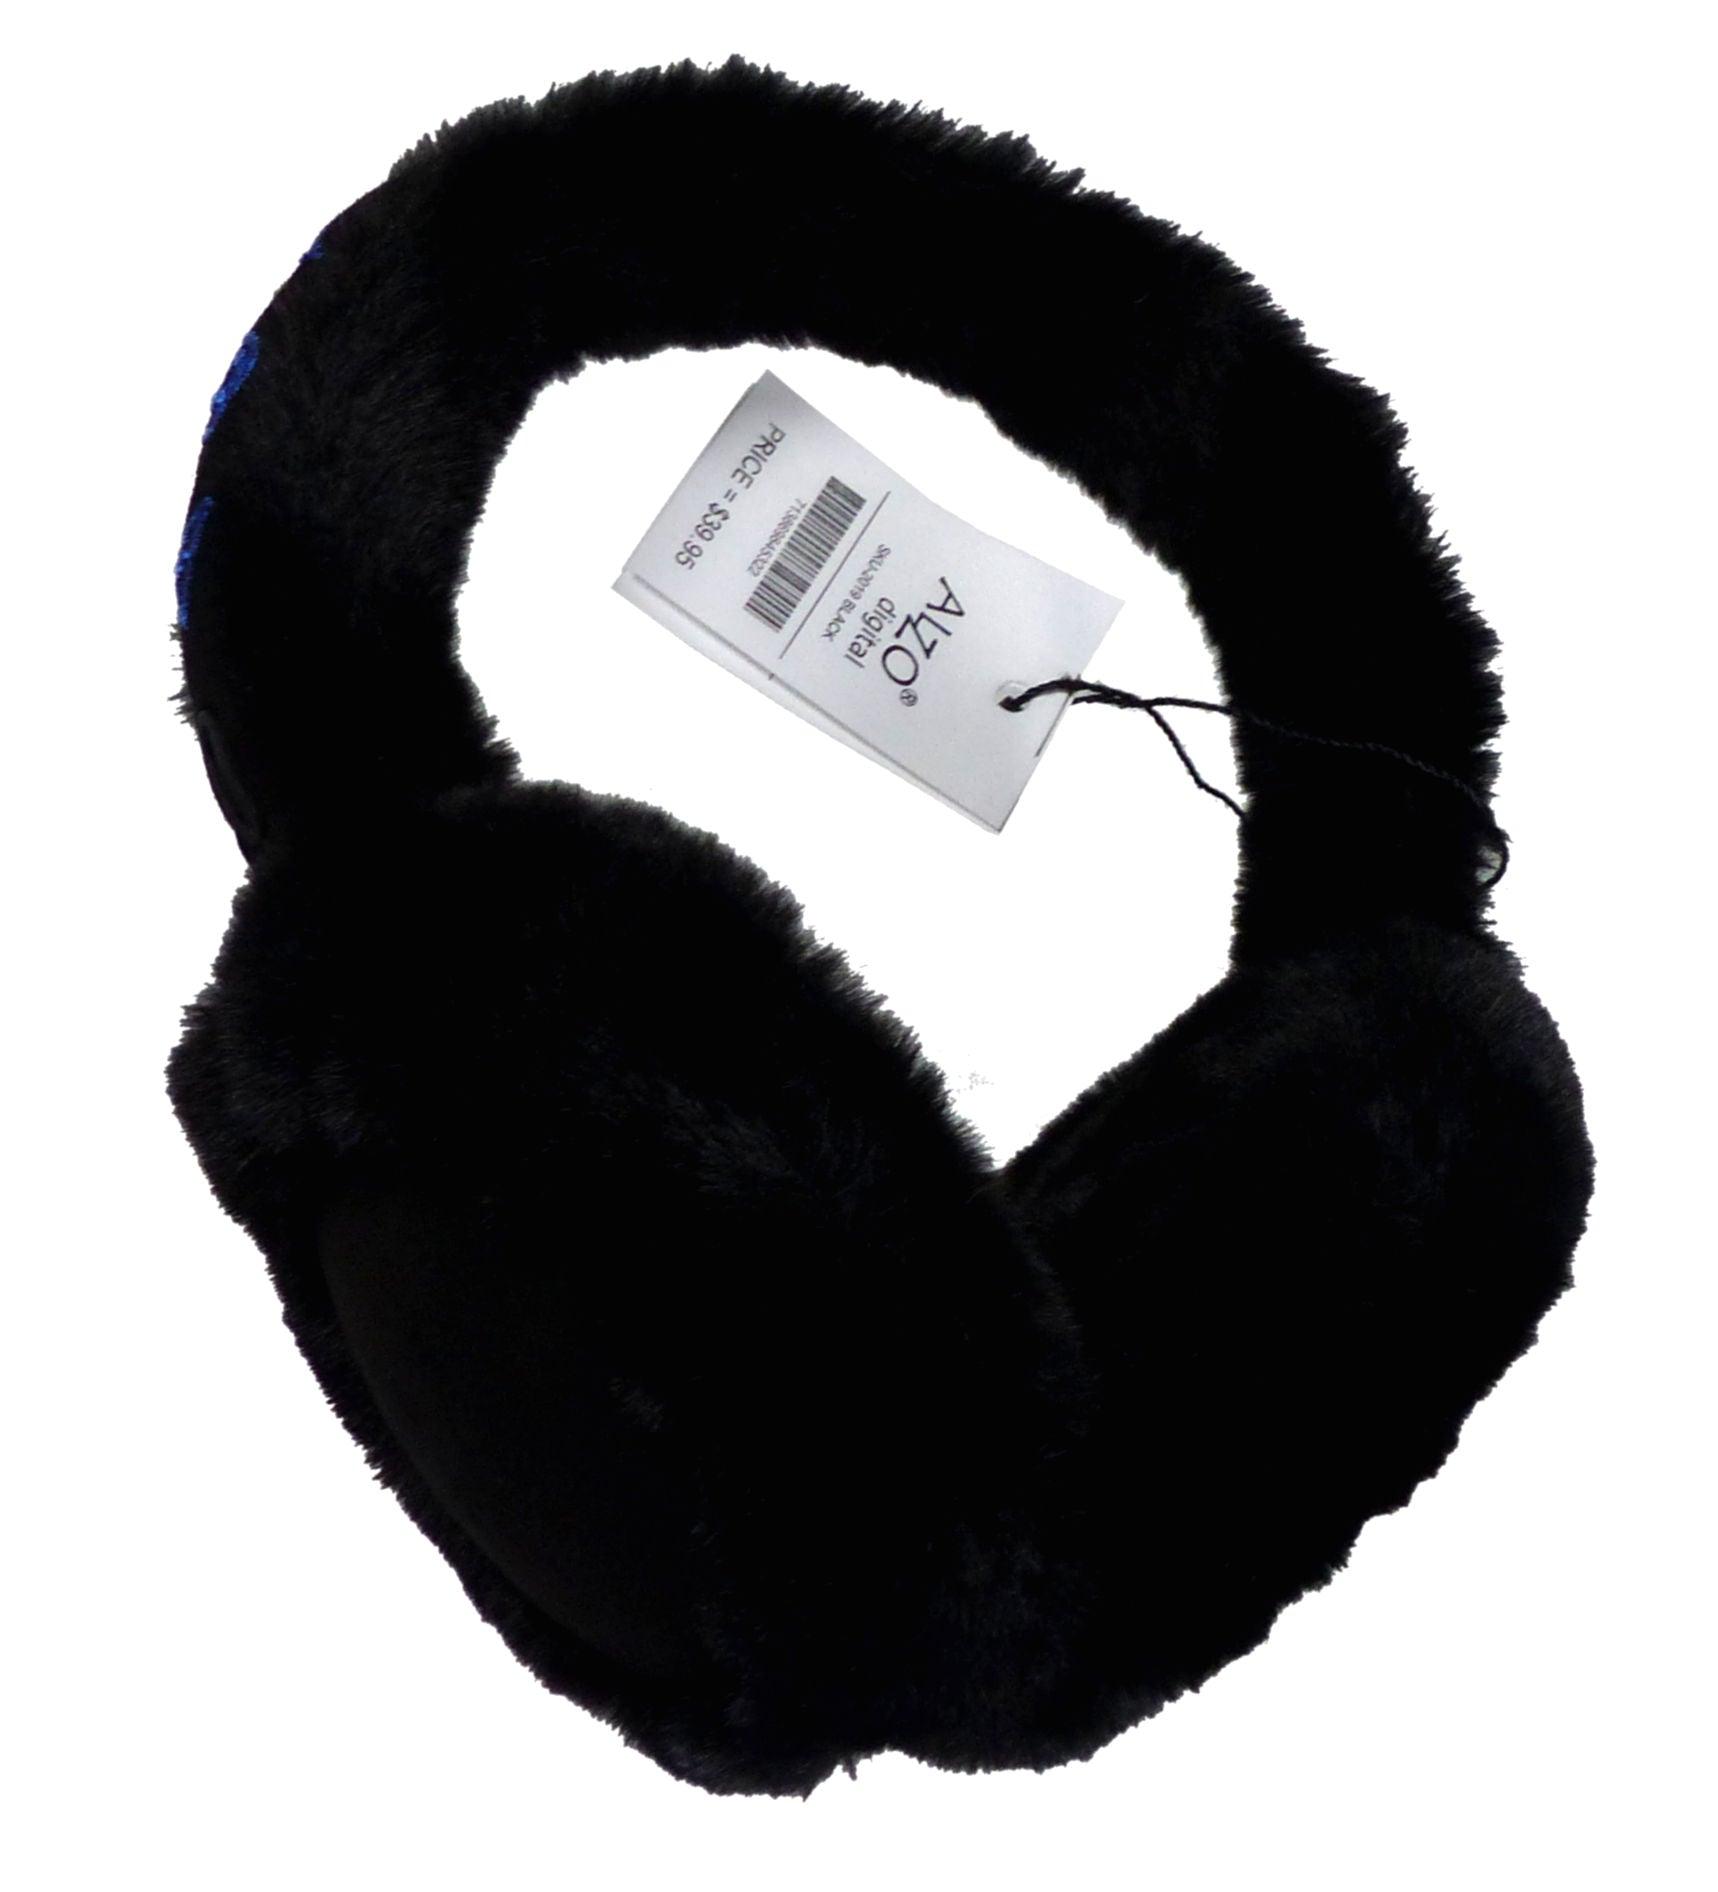 ALZO Bluetooth Earmuff Headphones Fashion Accessory - Color Black